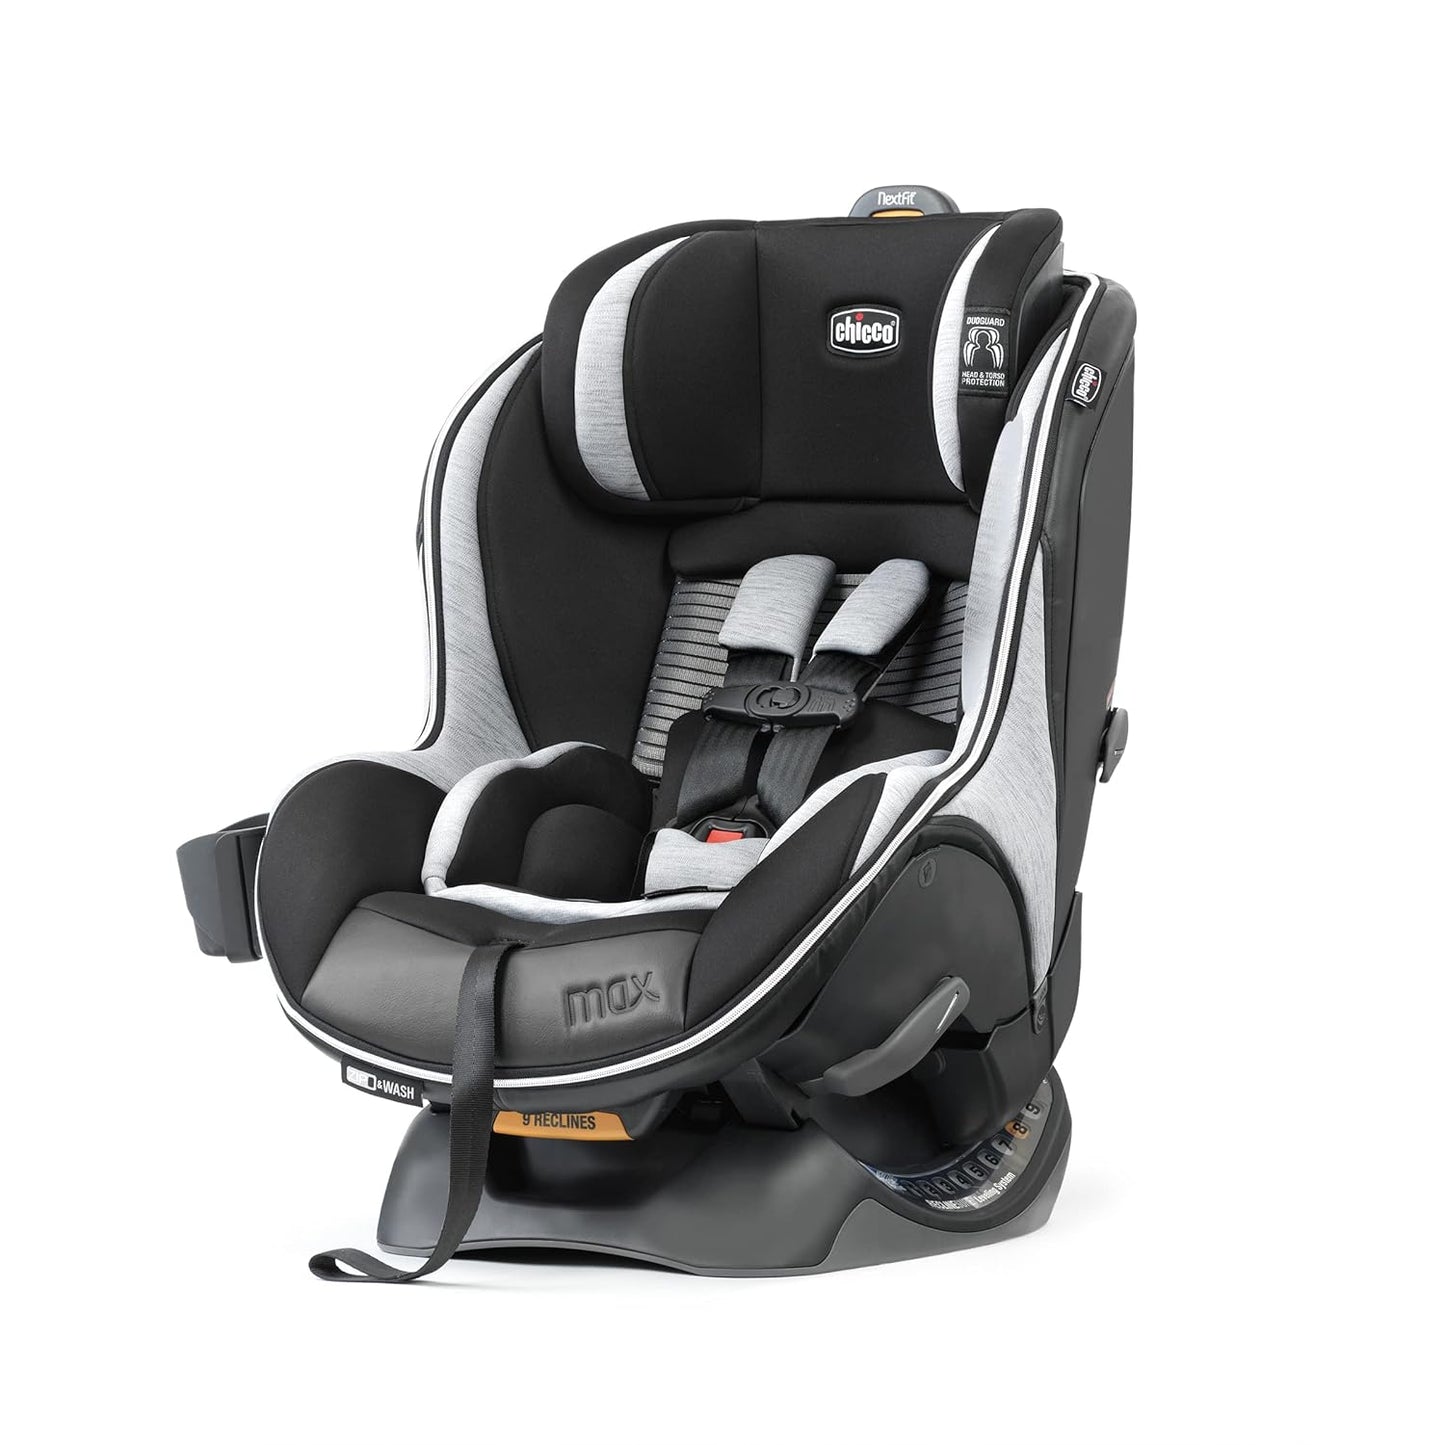 New Chicco NextFit Max Zip Air Convertible Car Seat (Vero)